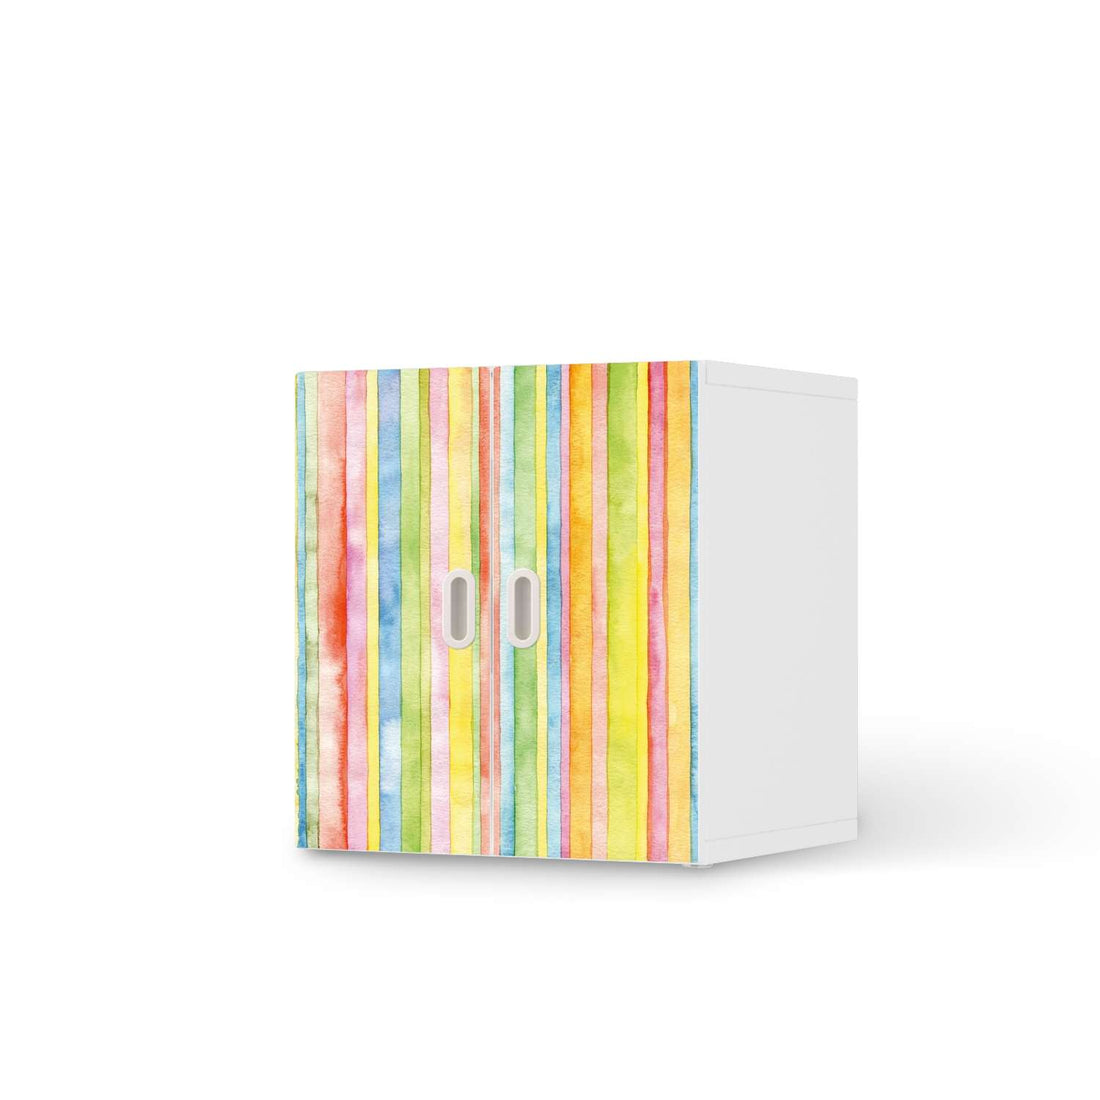 Selbstklebende Folie Watercolor Stripes - IKEA Stuva / Fritids Schrank - 2 kleine Türen  - weiss